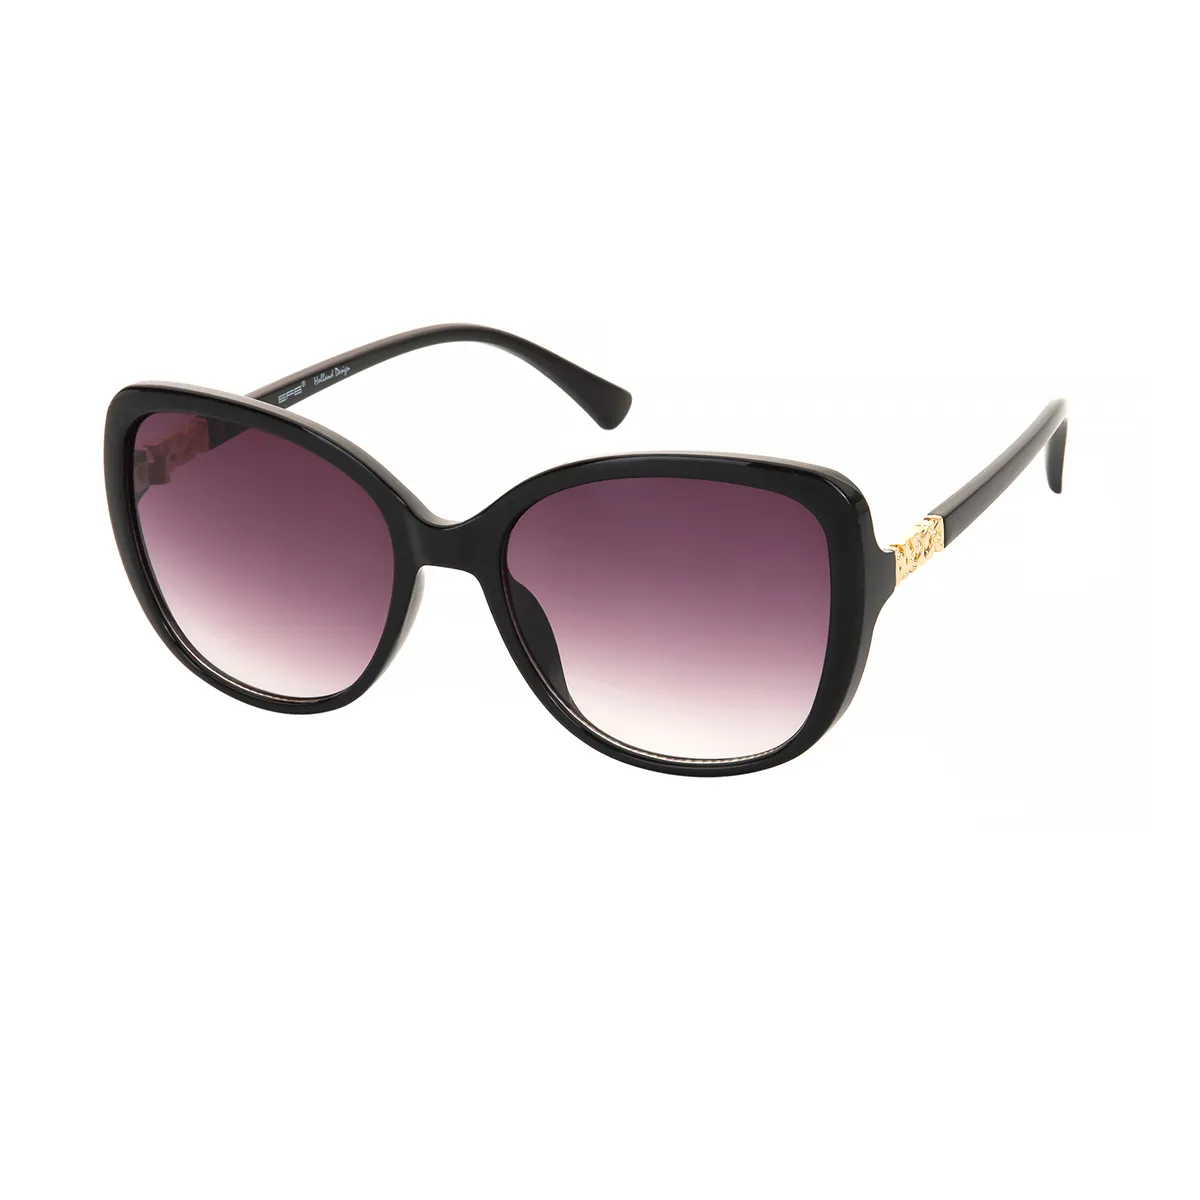 Darry - Oval Black Sunglasses for Women